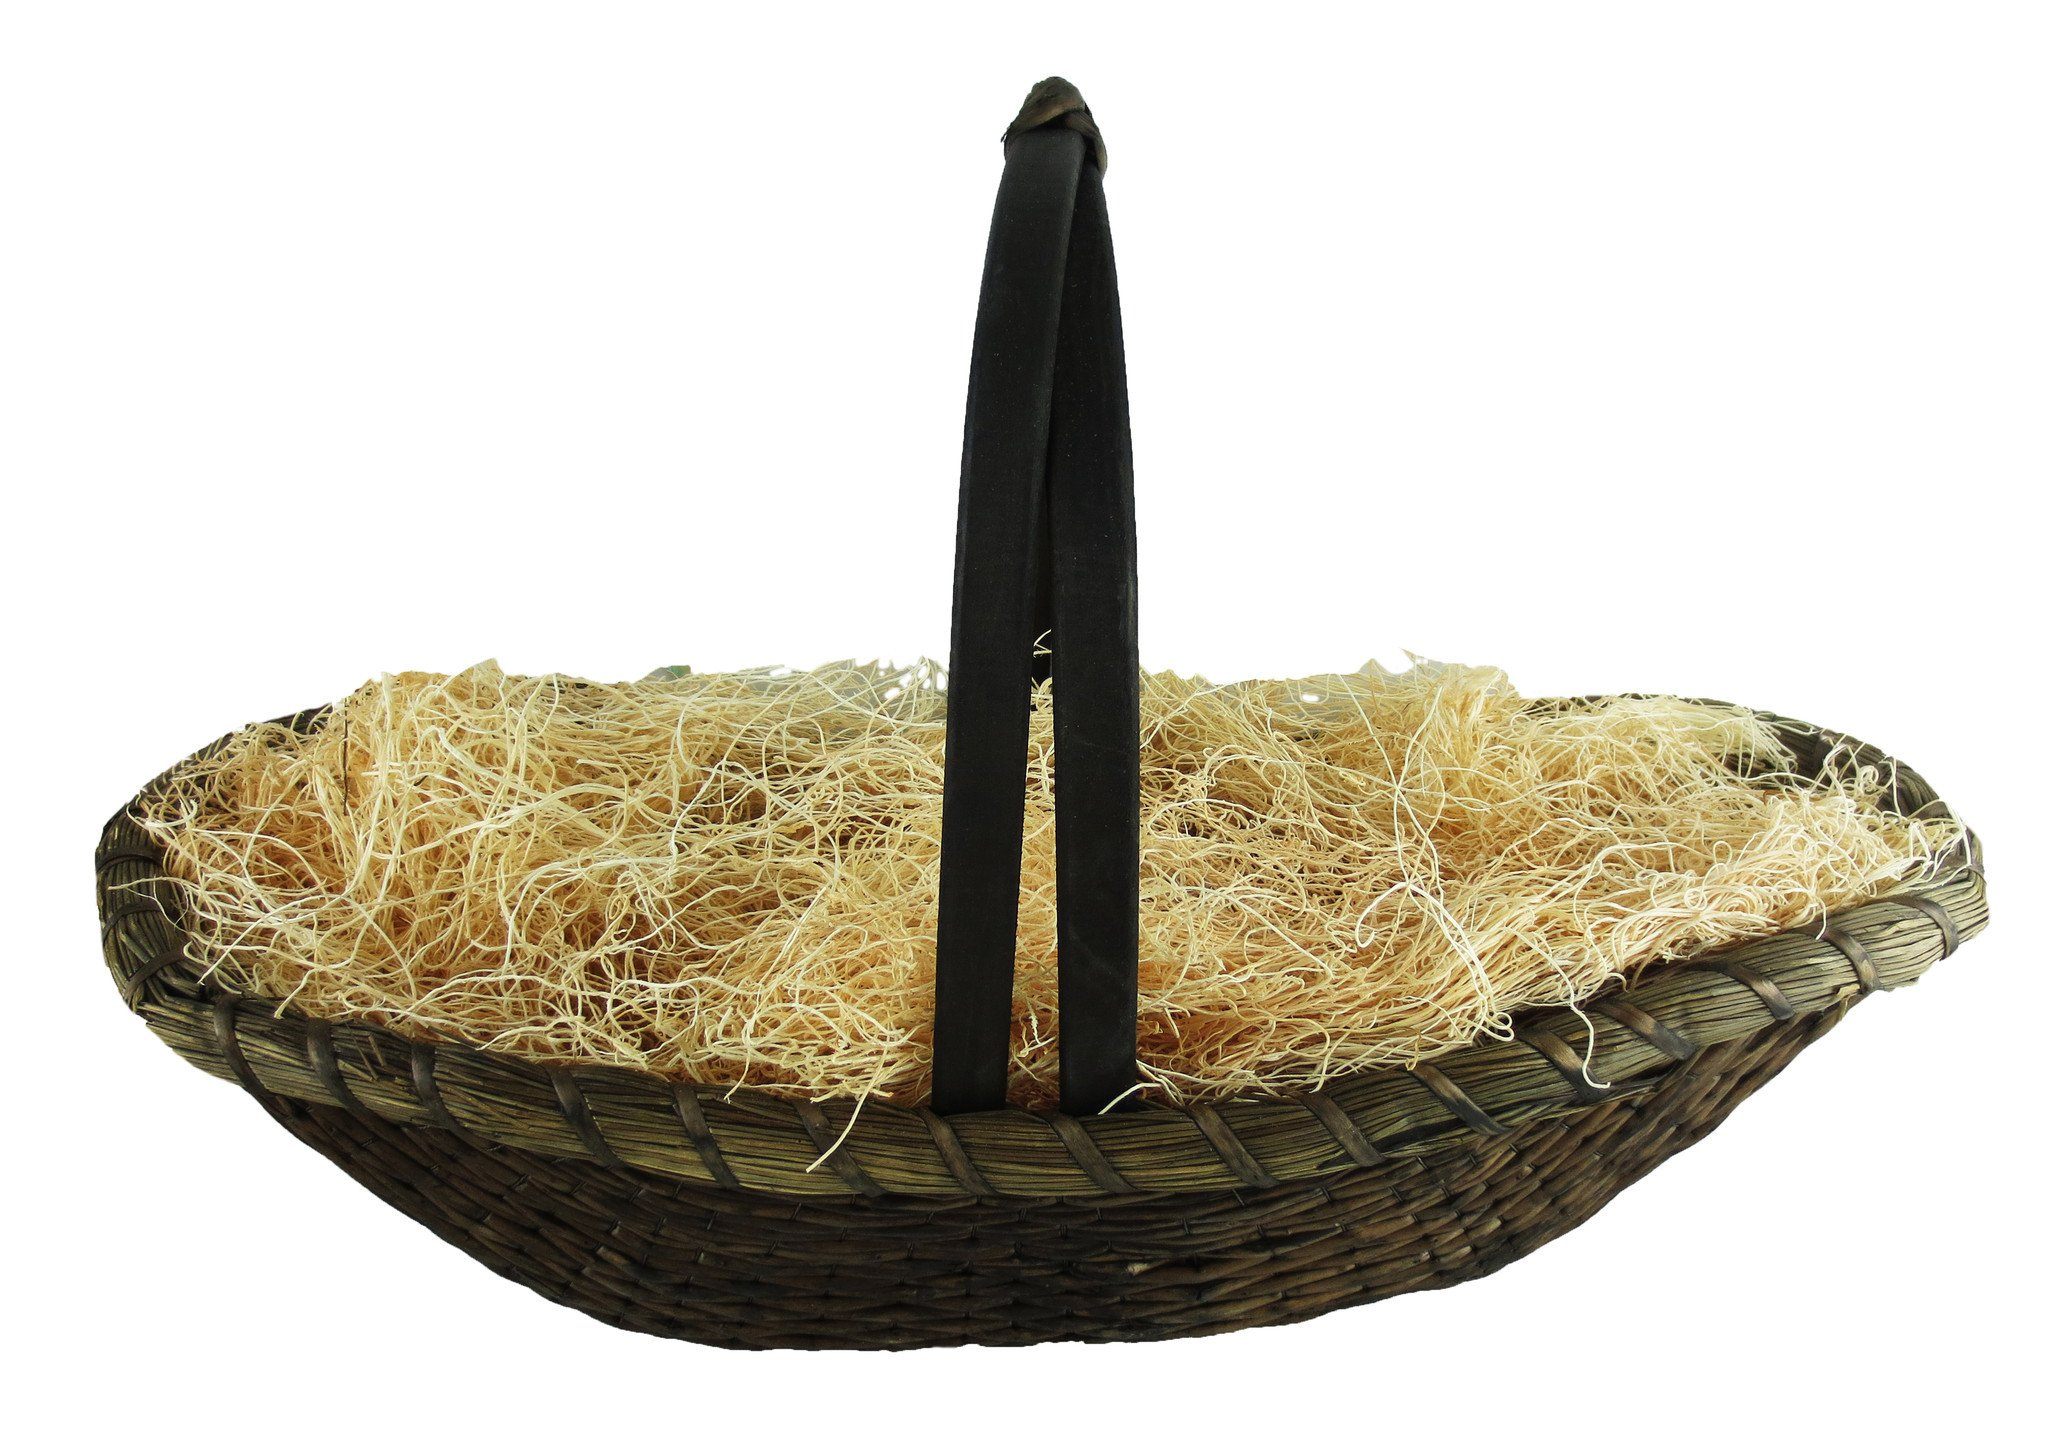 The Purim Celebration Basket